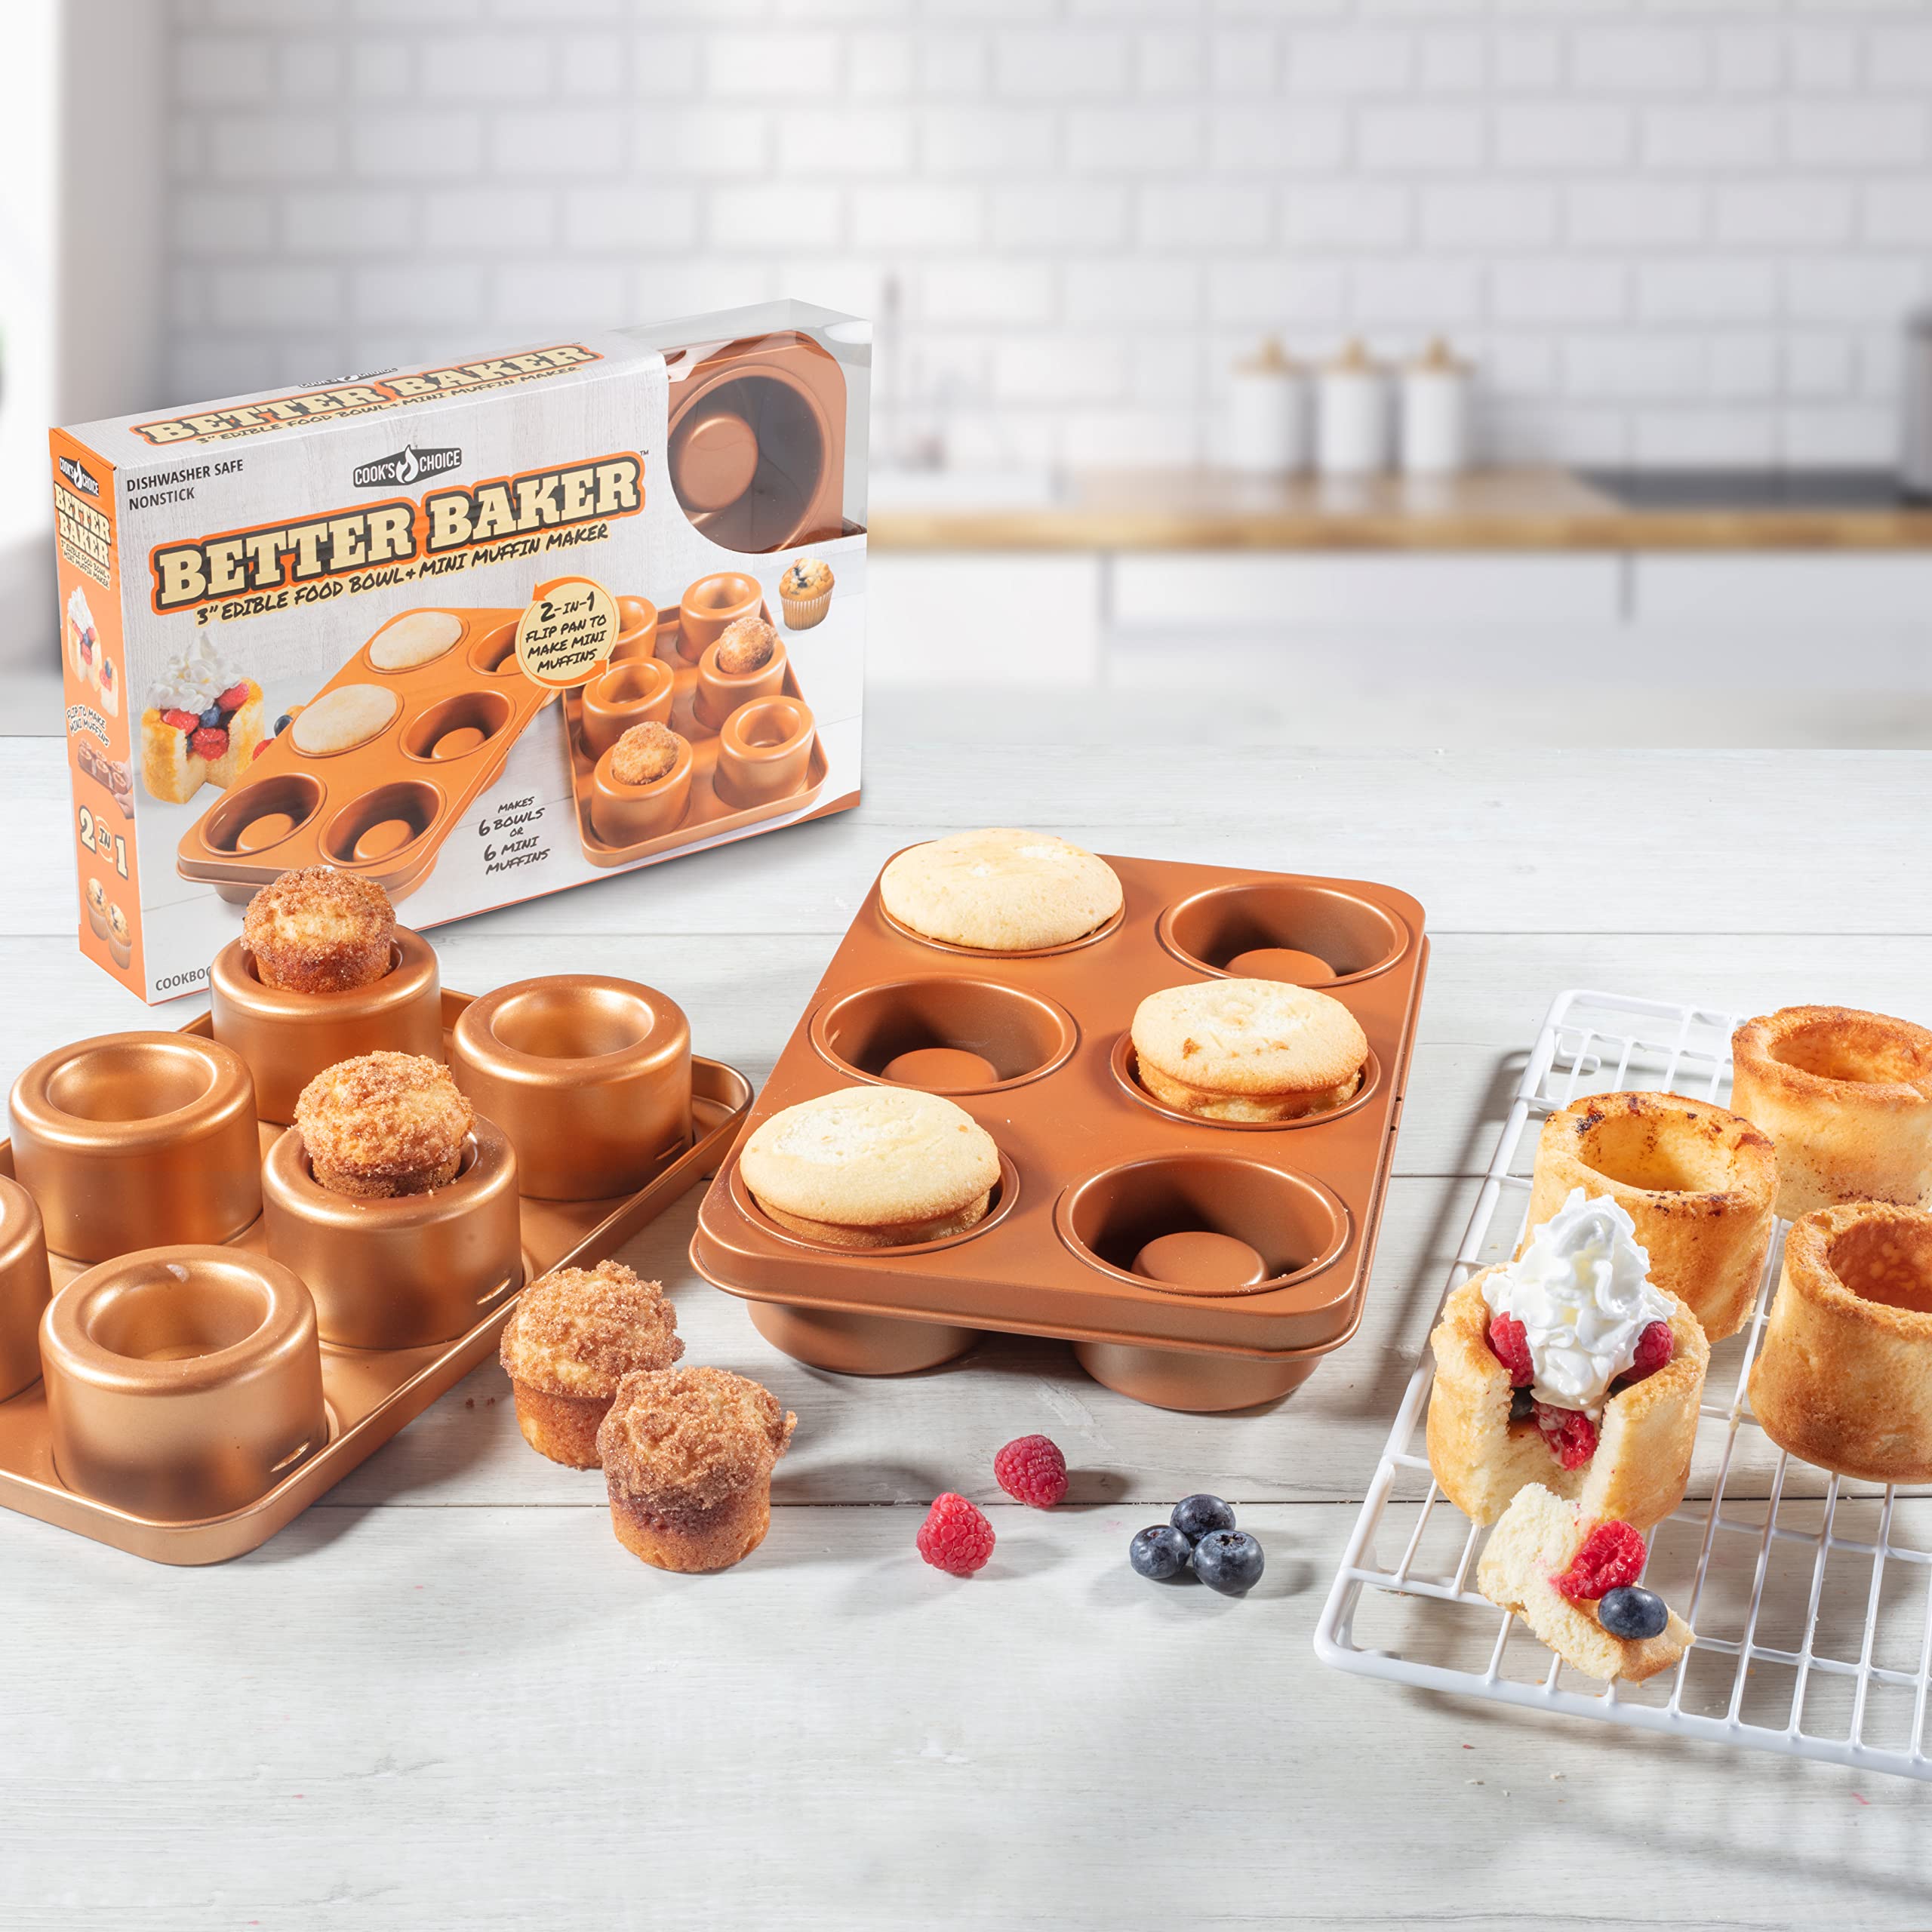 Cook's Choice Better Baker Edible Food Bowl Maker- Bake six 3